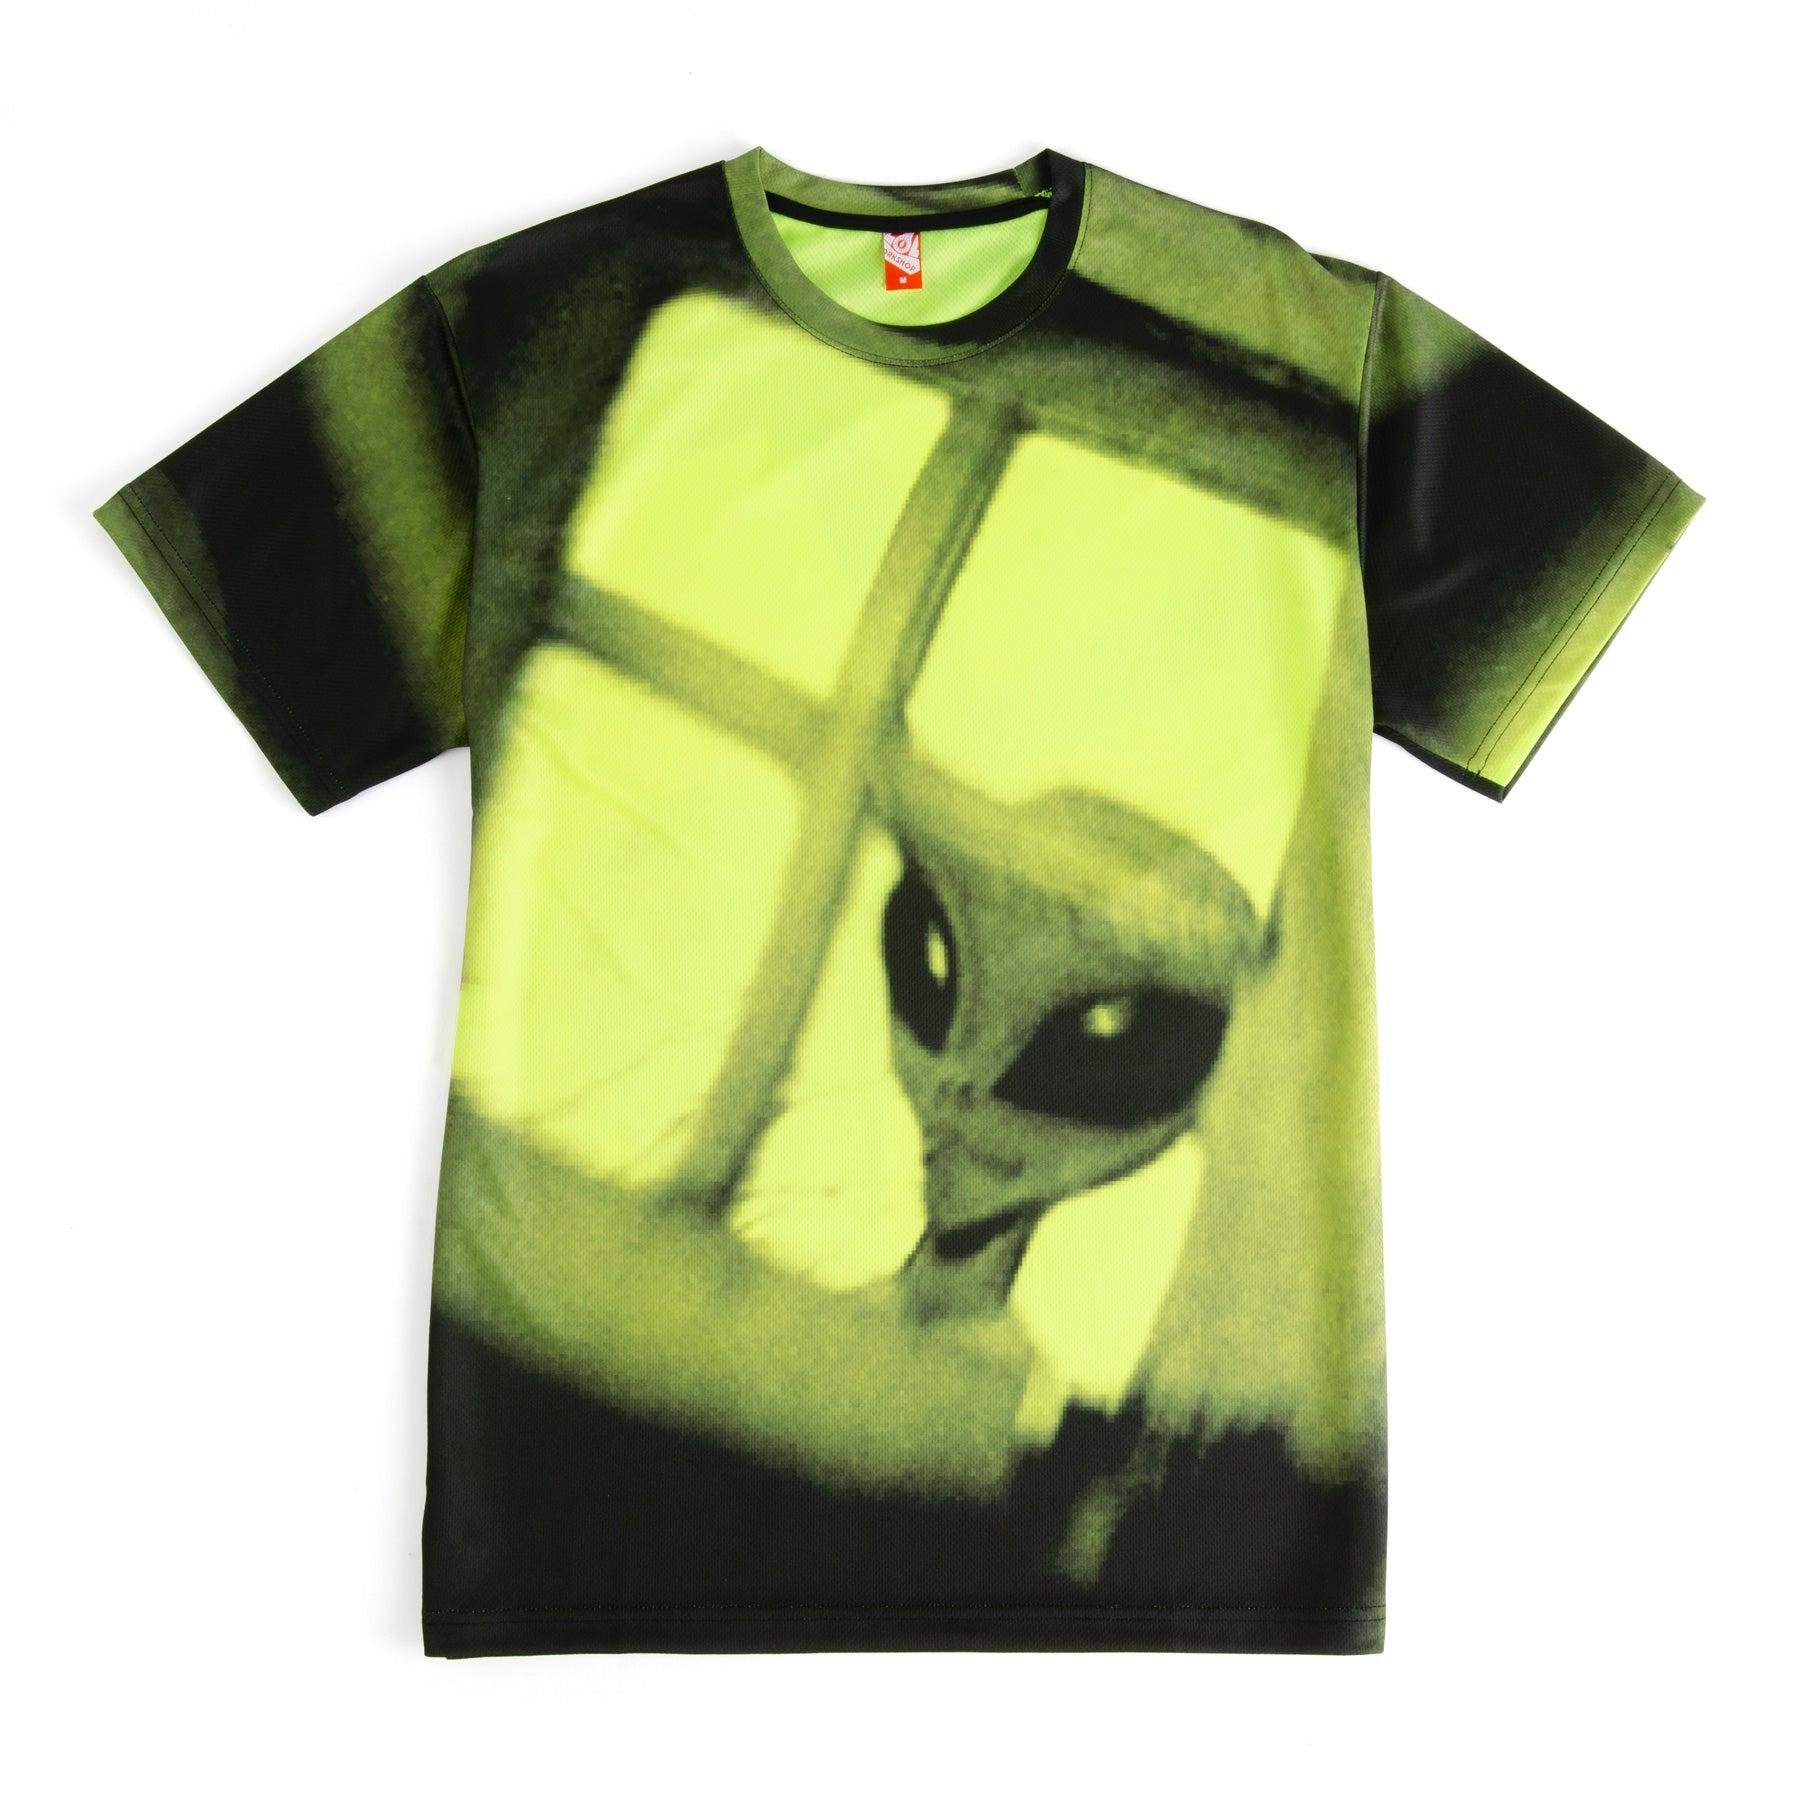 Alien Workshop Visitor Big Print T-Shirt Orange / XXL